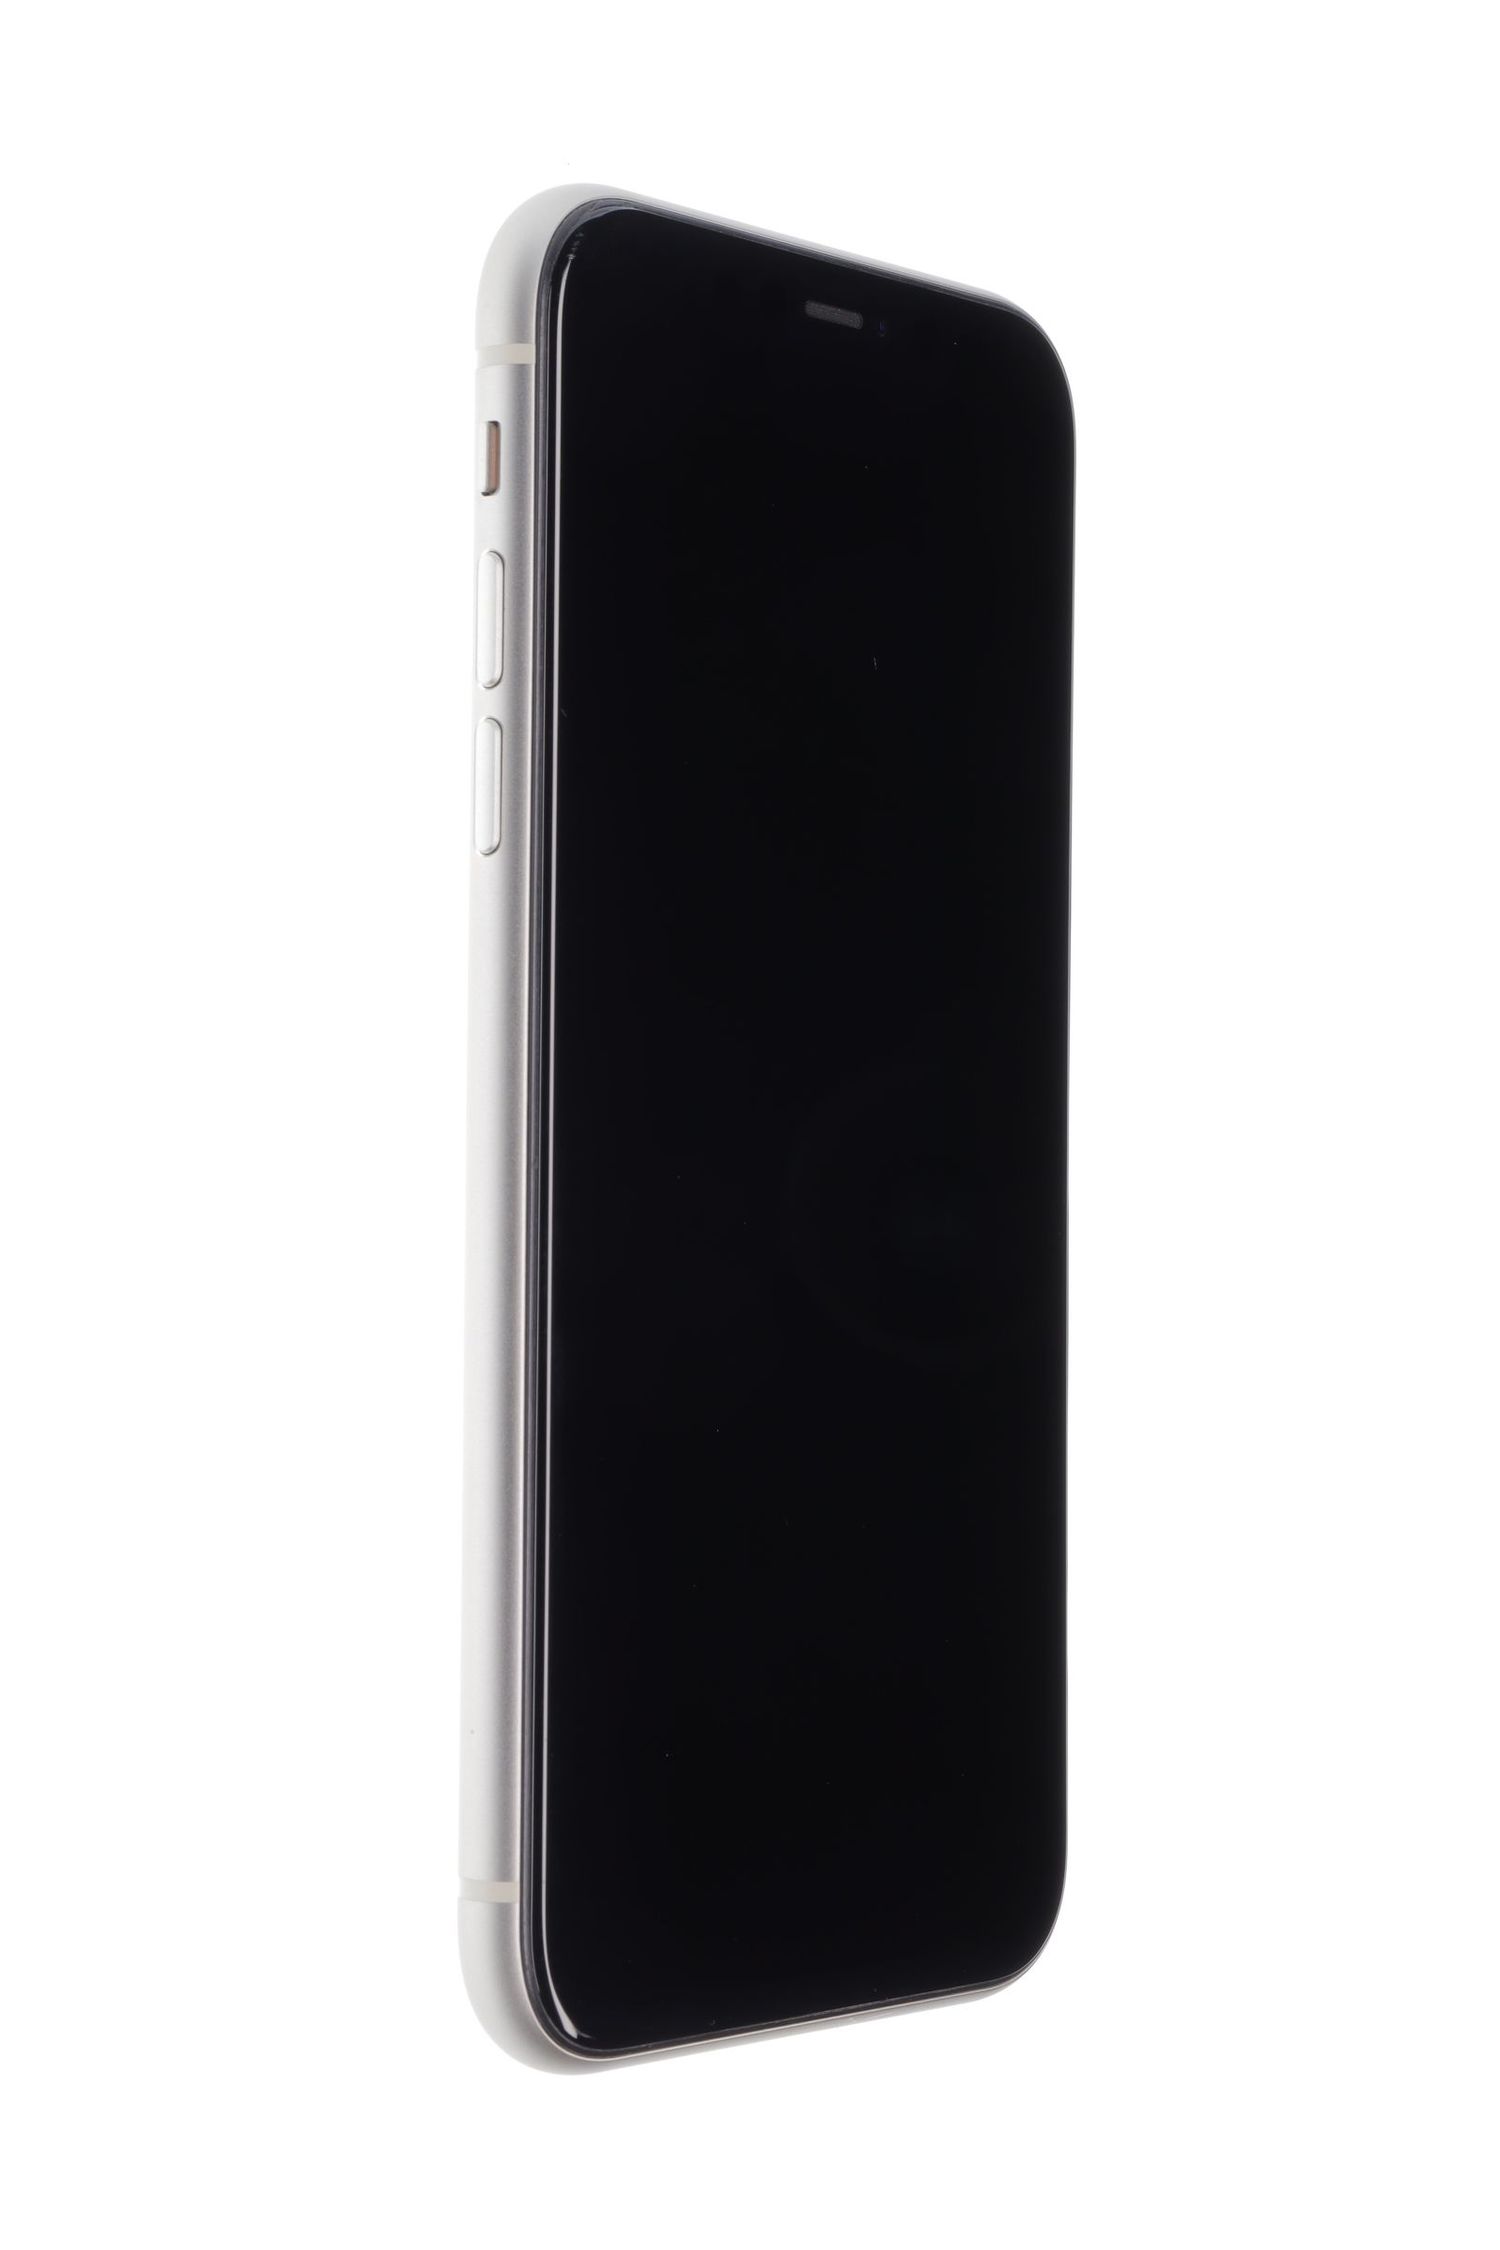 Мобилен телефон Apple iPhone 11, White, 64 GB, Excelent